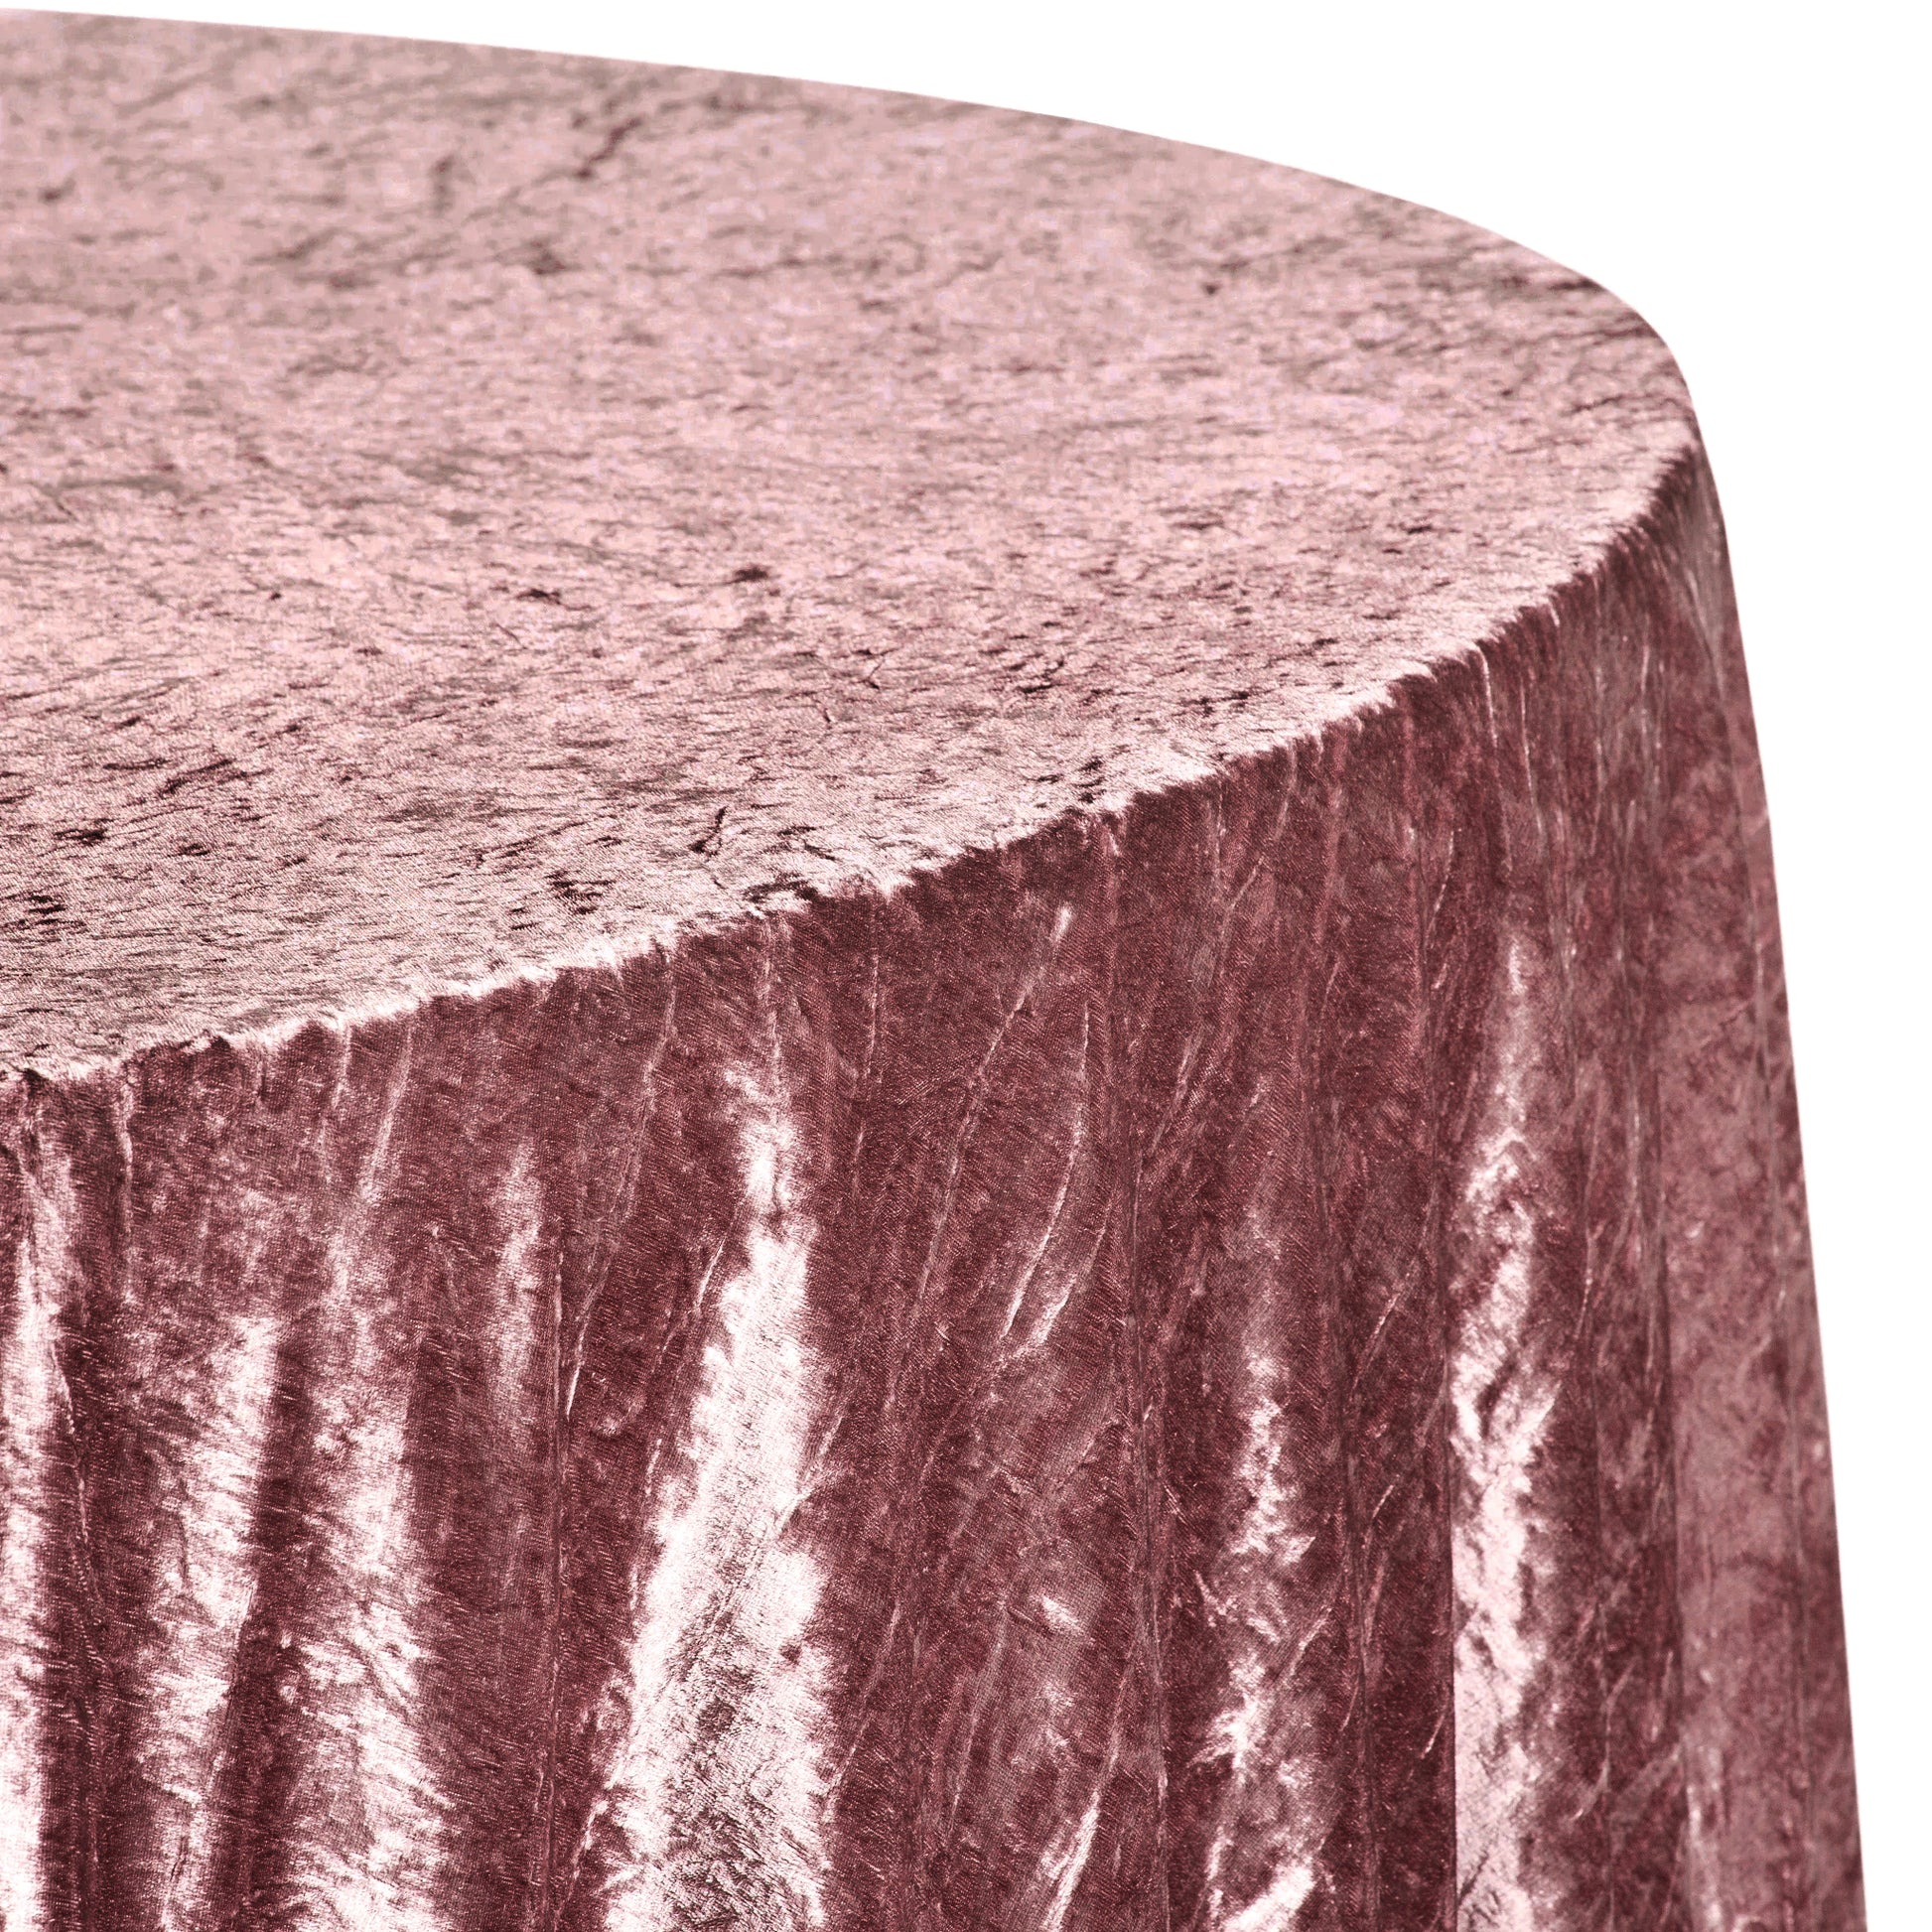 Velvet 120" Round Tablecloth - Dark Dusty Rose/Mauve - CV Linens